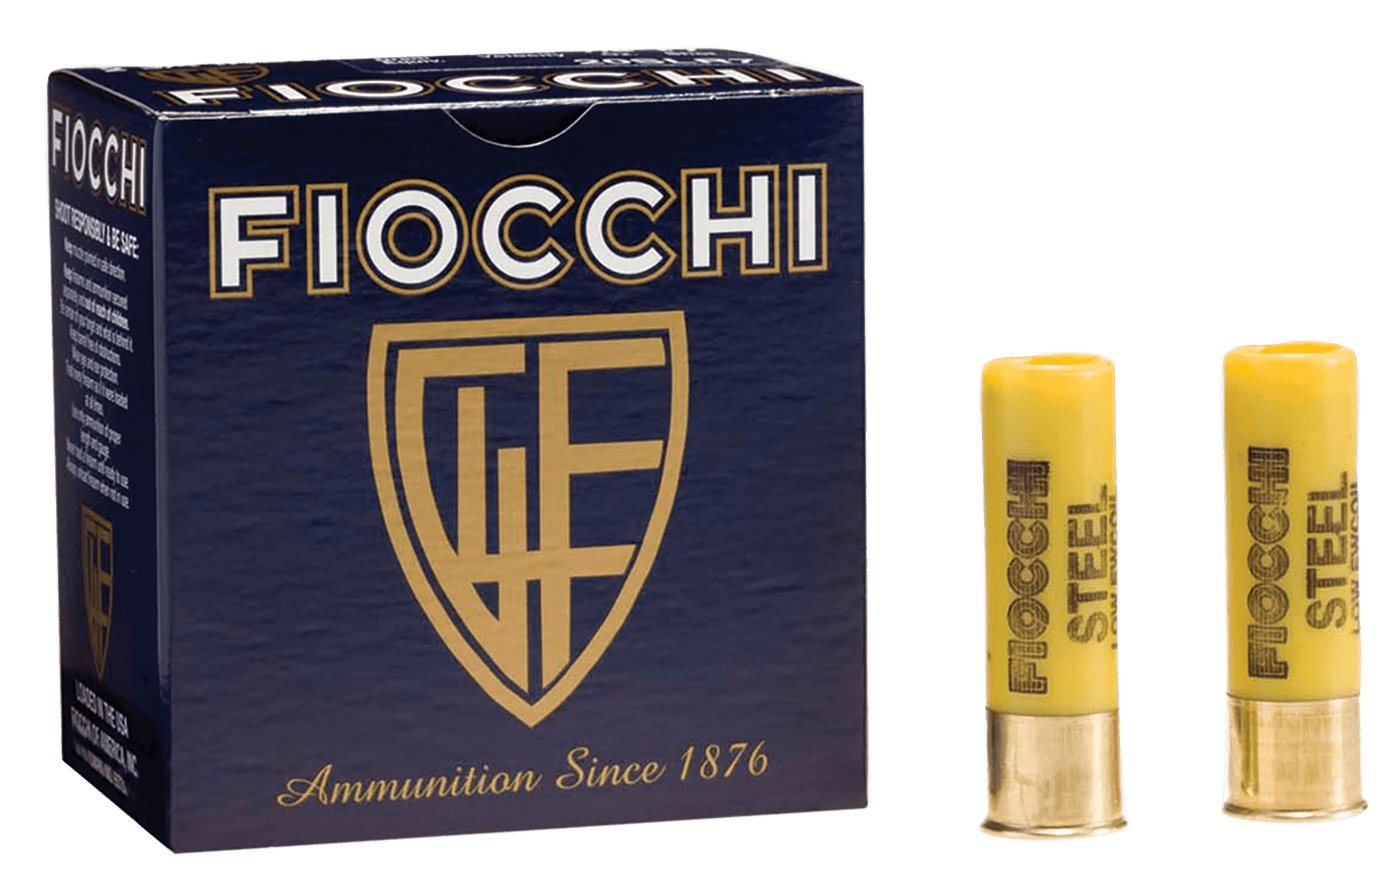 Fiocchi Fiocchi Steel Target, Fio 12slr7    Steel Tgt     1oz              25/10 Ammo